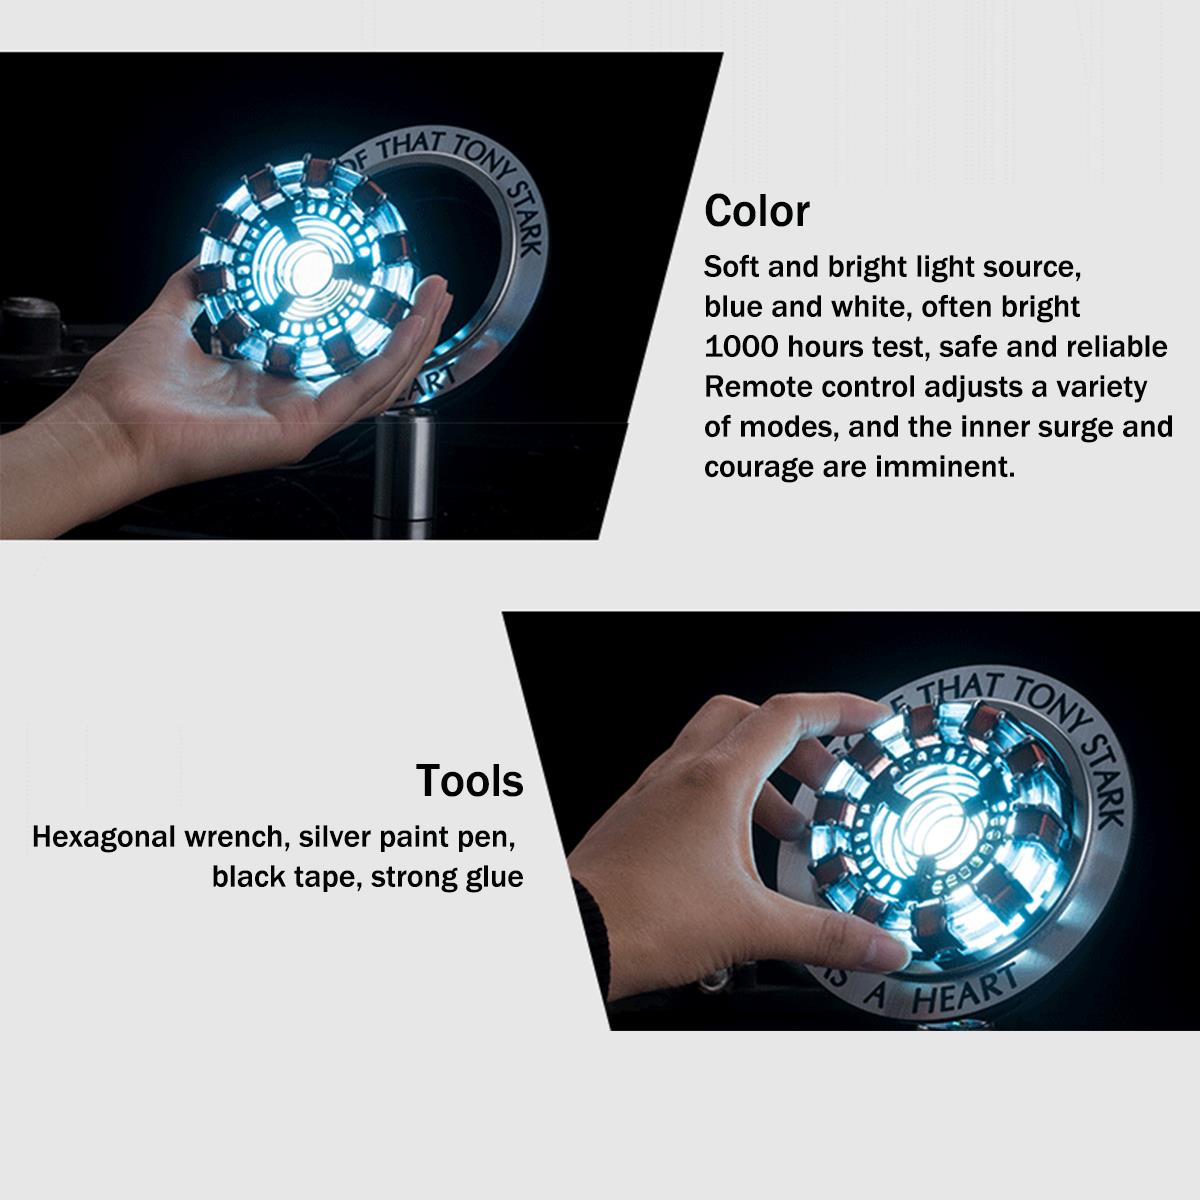 MK1-Acrylic-Remote-Ver-Tony-DIY-Arc-Reactor-Lamp-Kit-Remote-Control-Illuminant-LED-Flash-Light-Heart-1447566-4